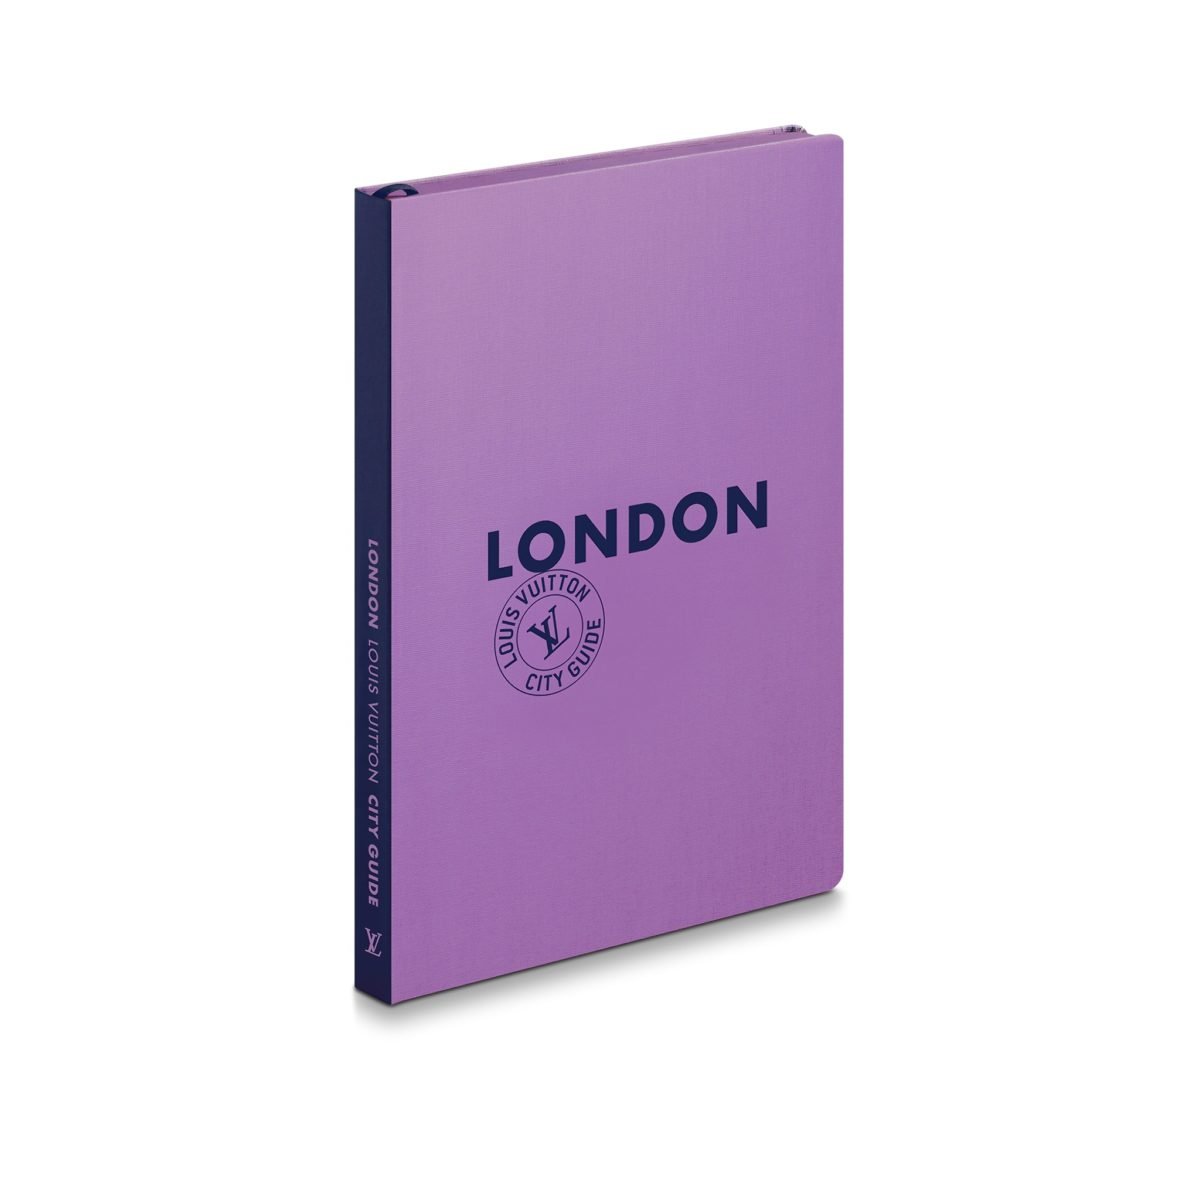 LOUIS VUITTON LONDON CITY GUIDE 2010 Paperback in Slipcase